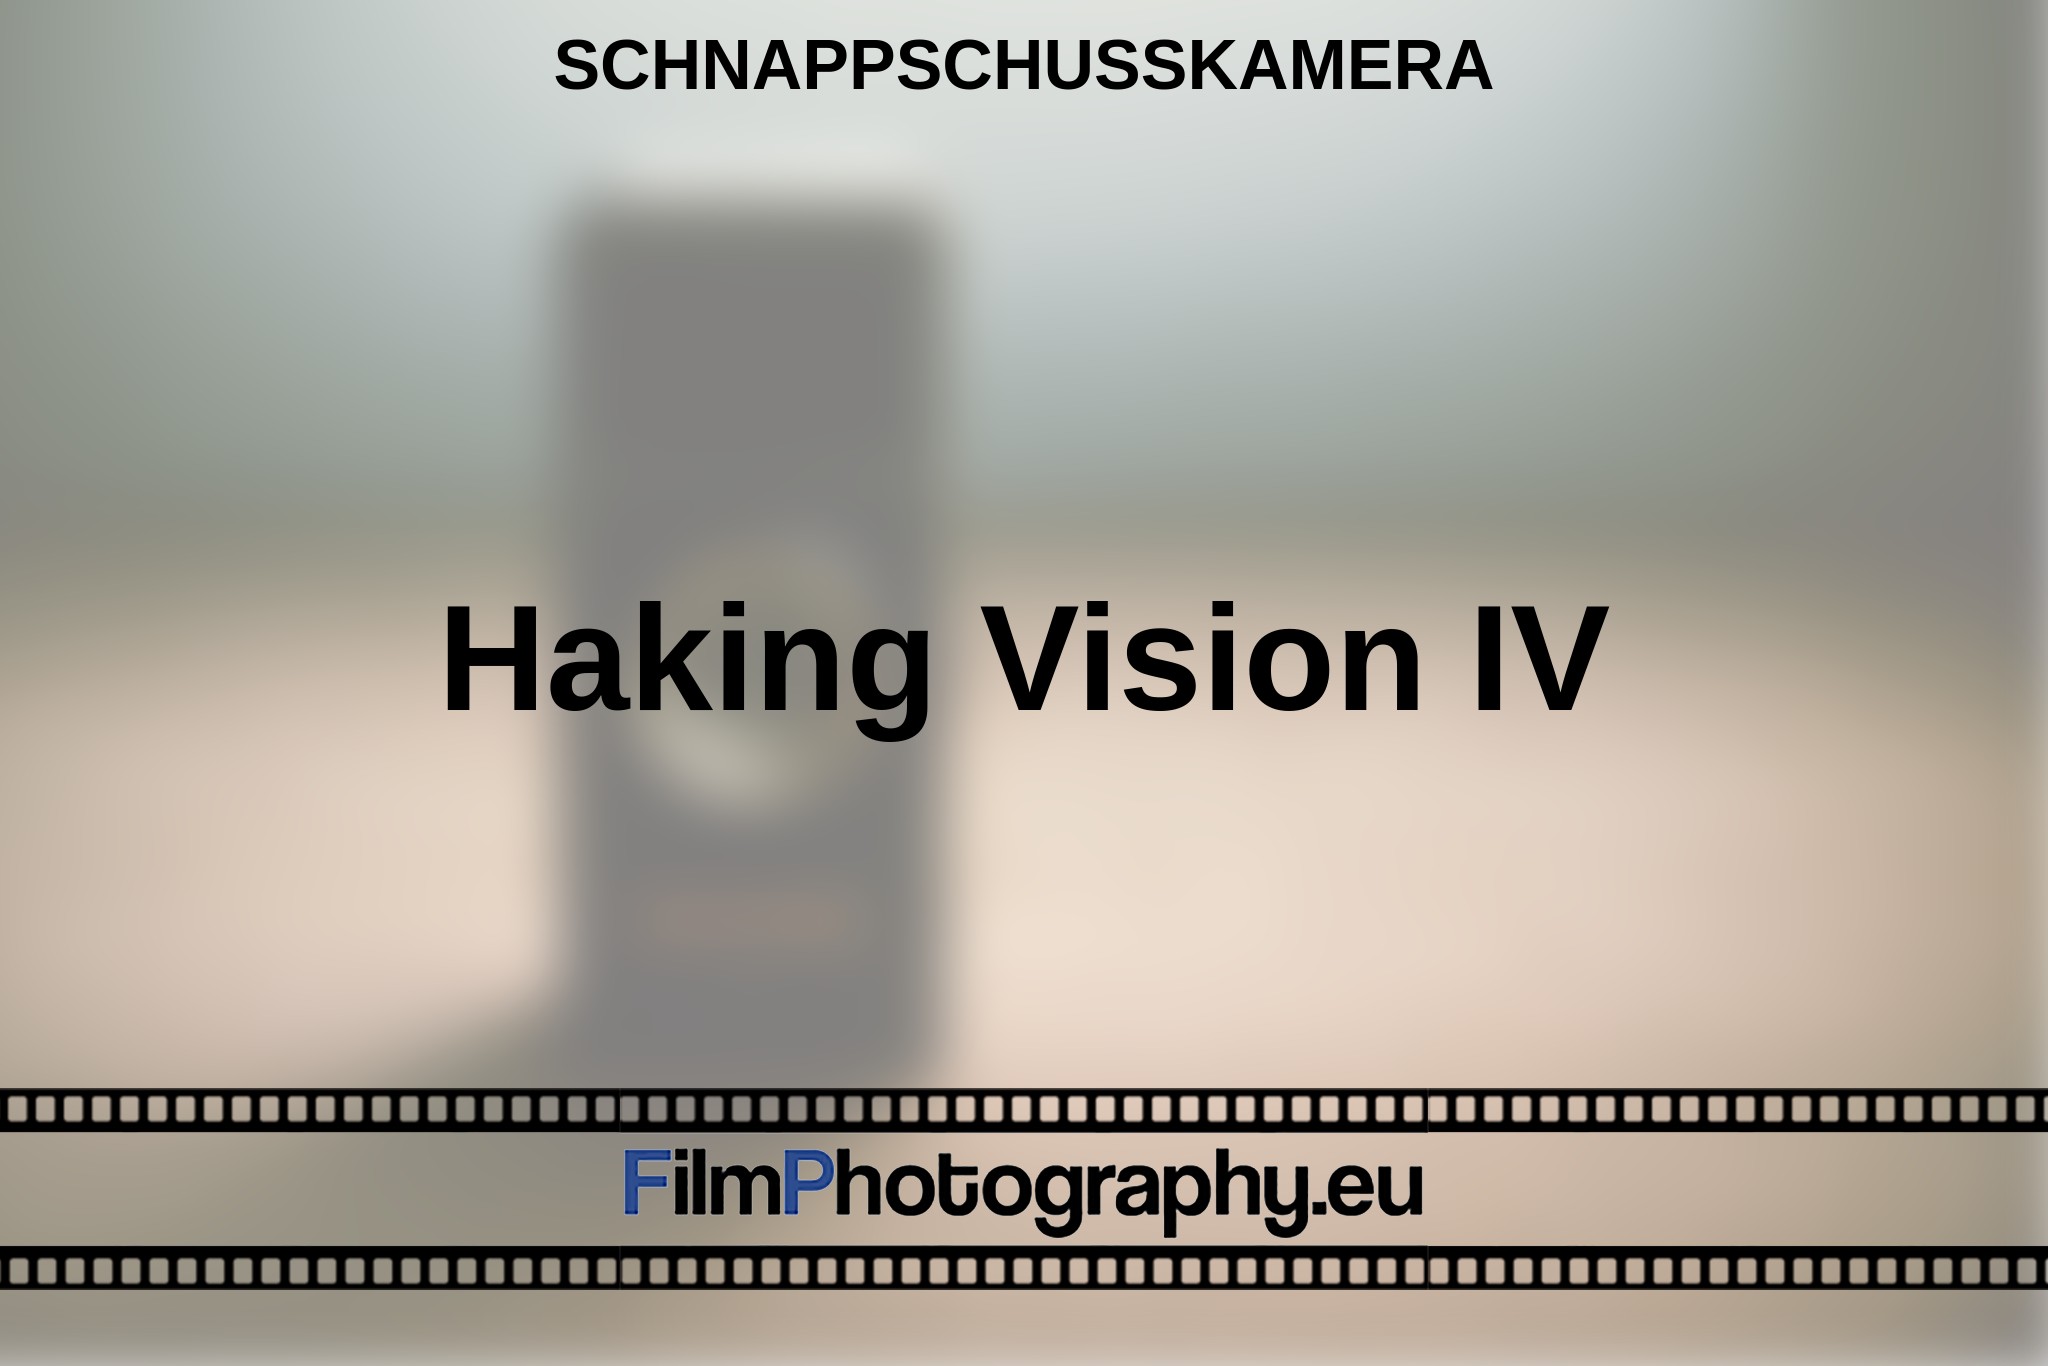 haking-vision-iv-schnappschusskamera-bnv.jpg